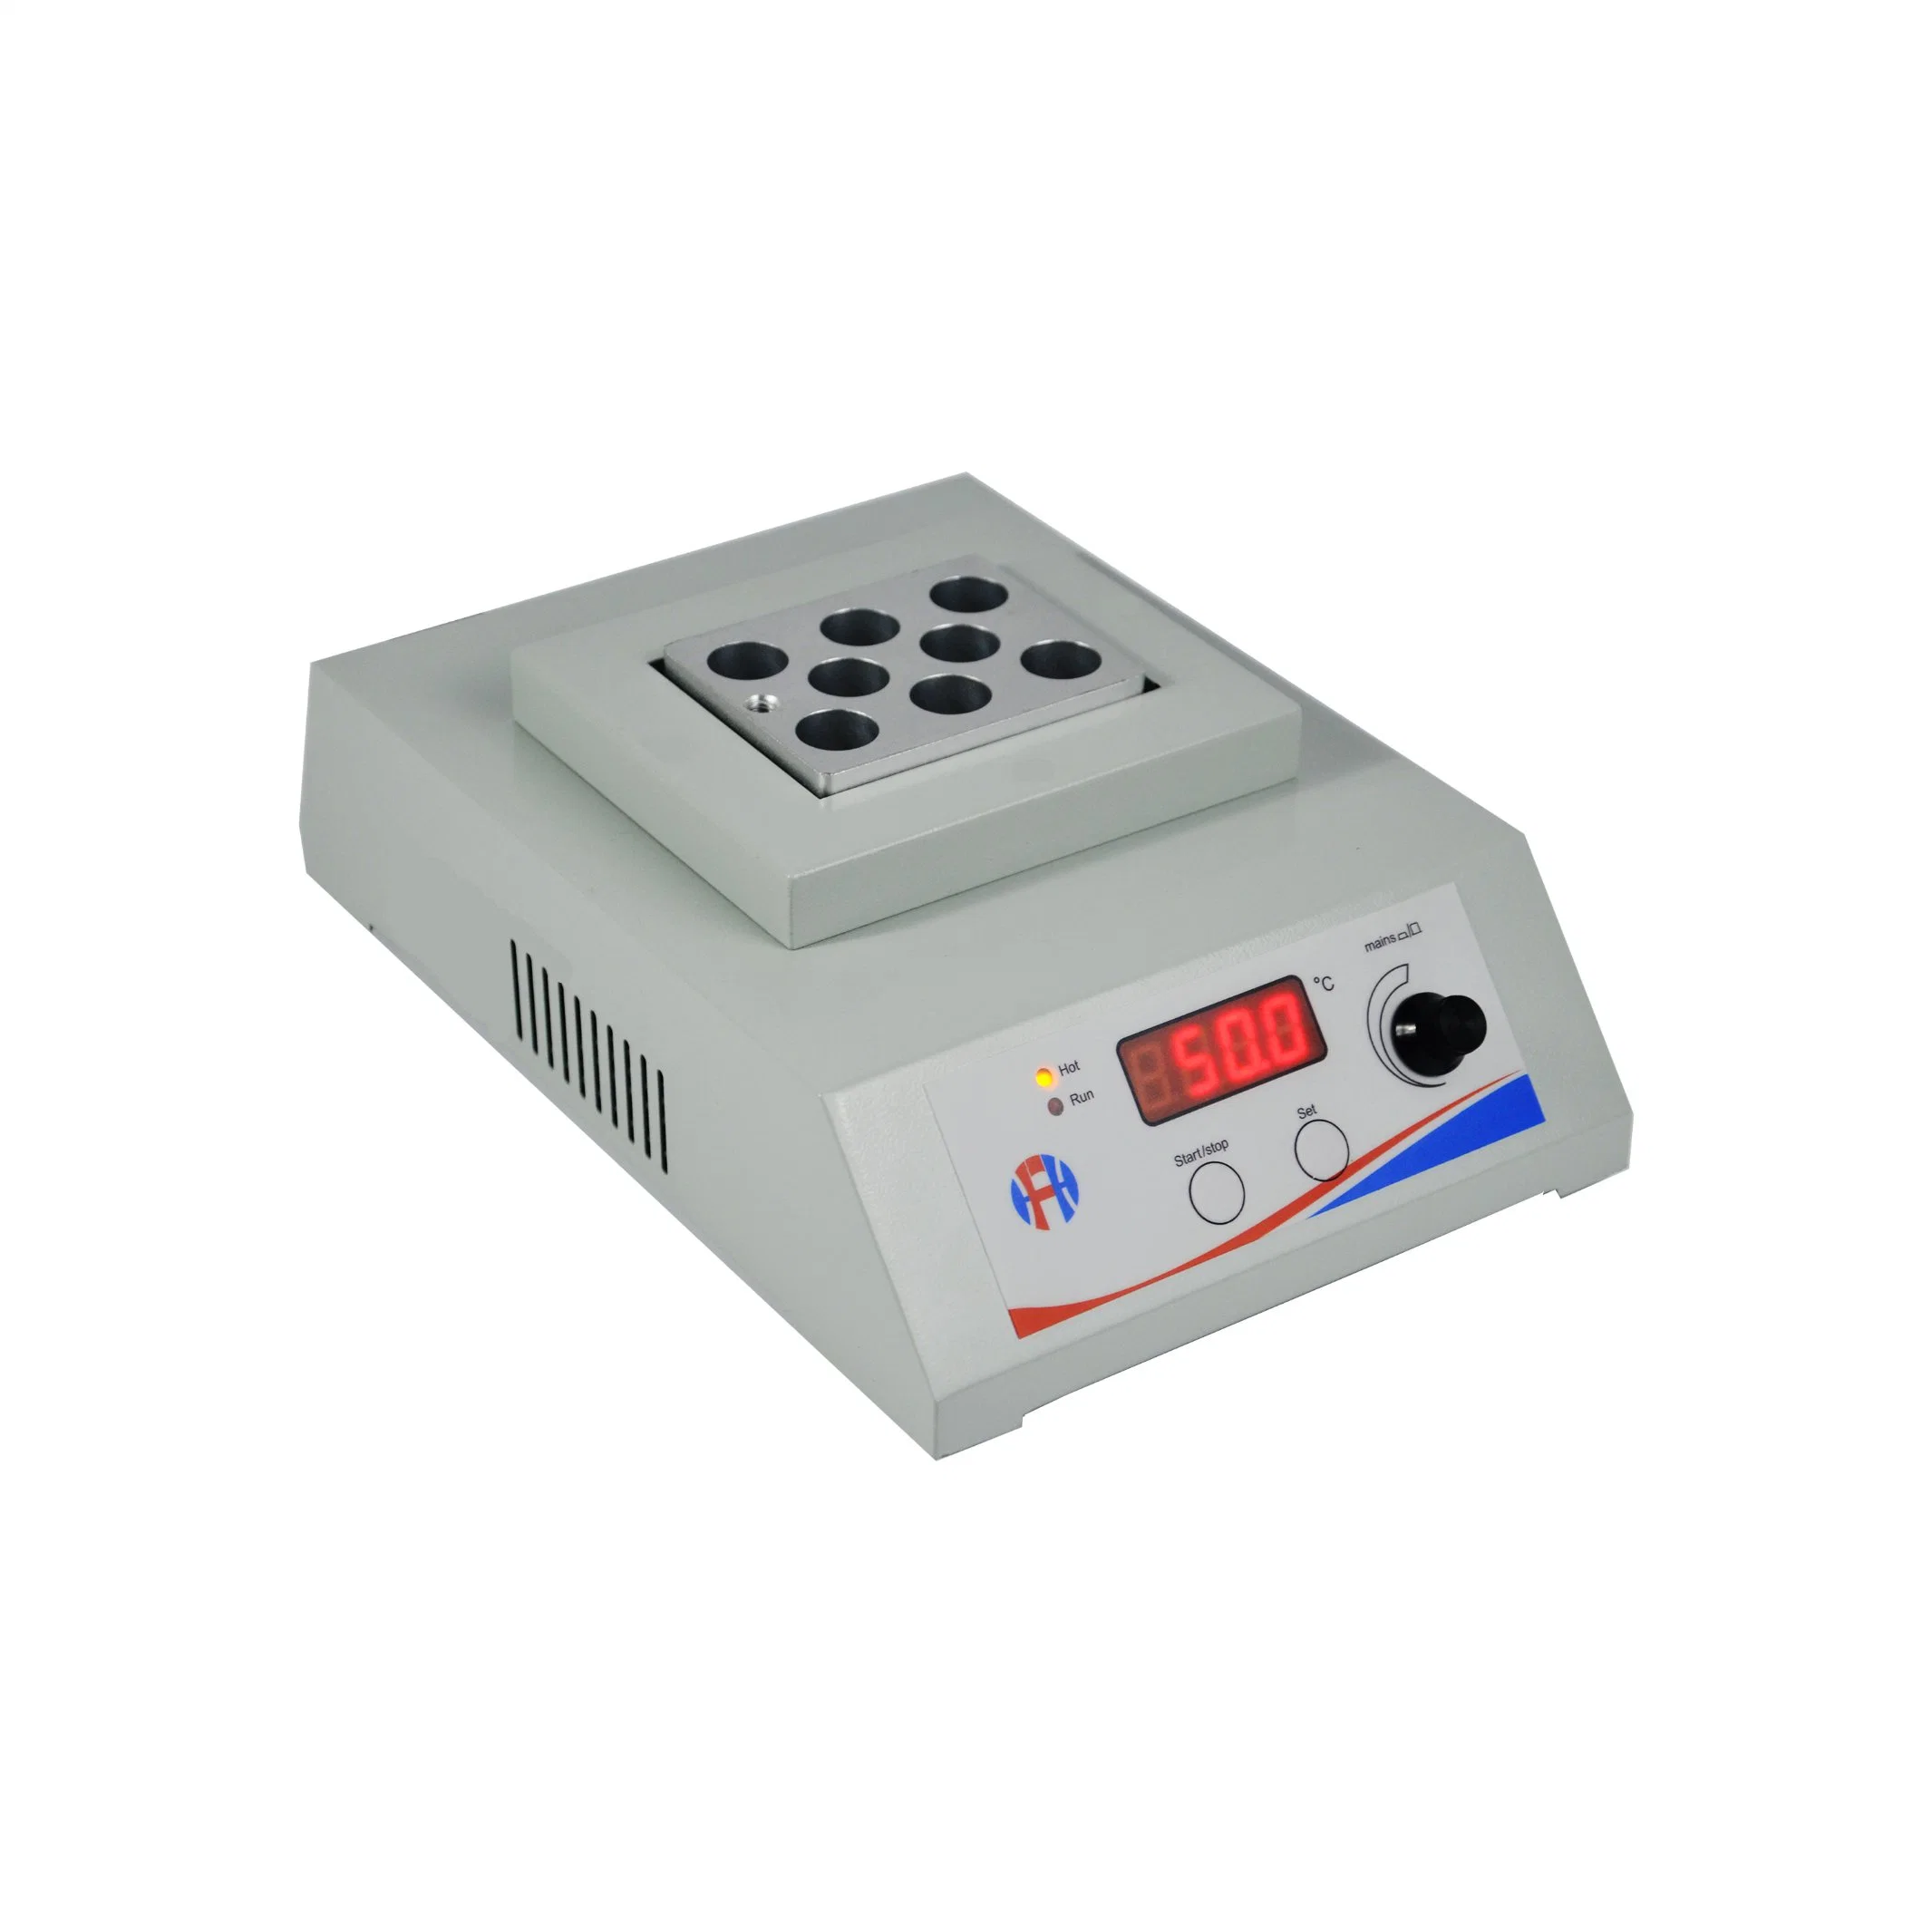 Hdb-101d Heating Thermo Control Metal Digital Incubator Dry Bath for Laboratory / Lab Instruments